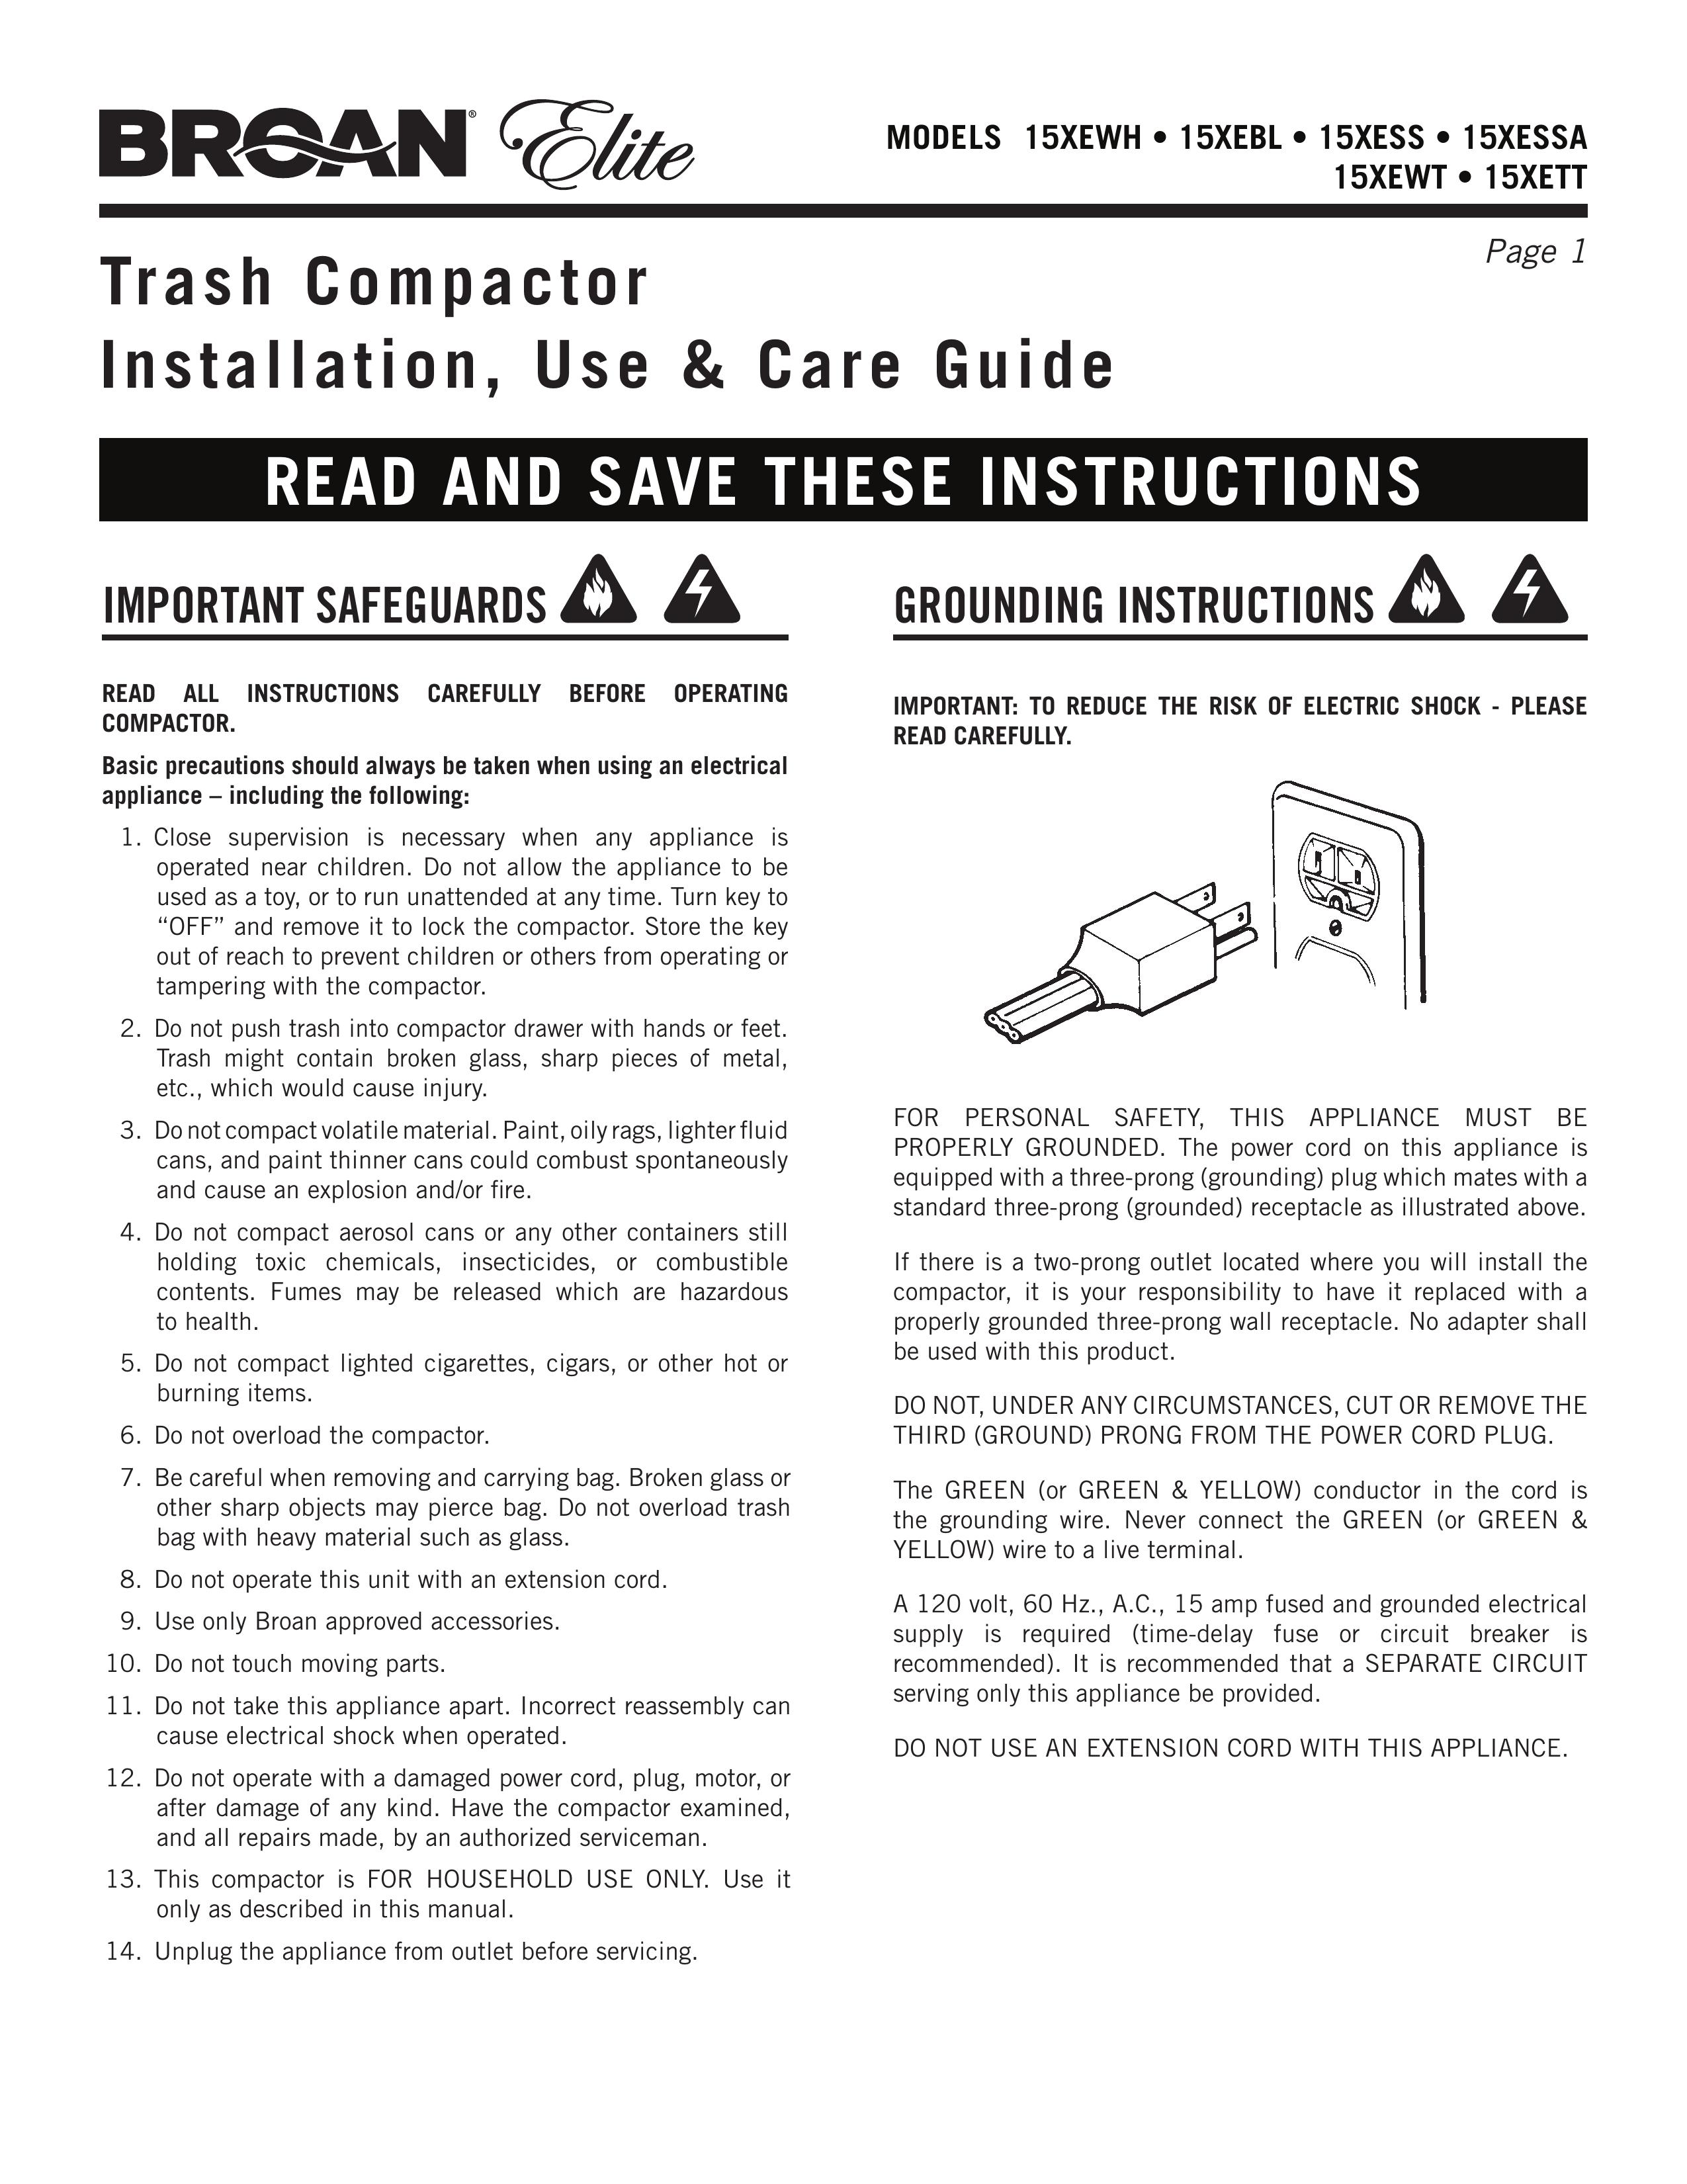 Broan 15XeWH Trash Compactor User Manual